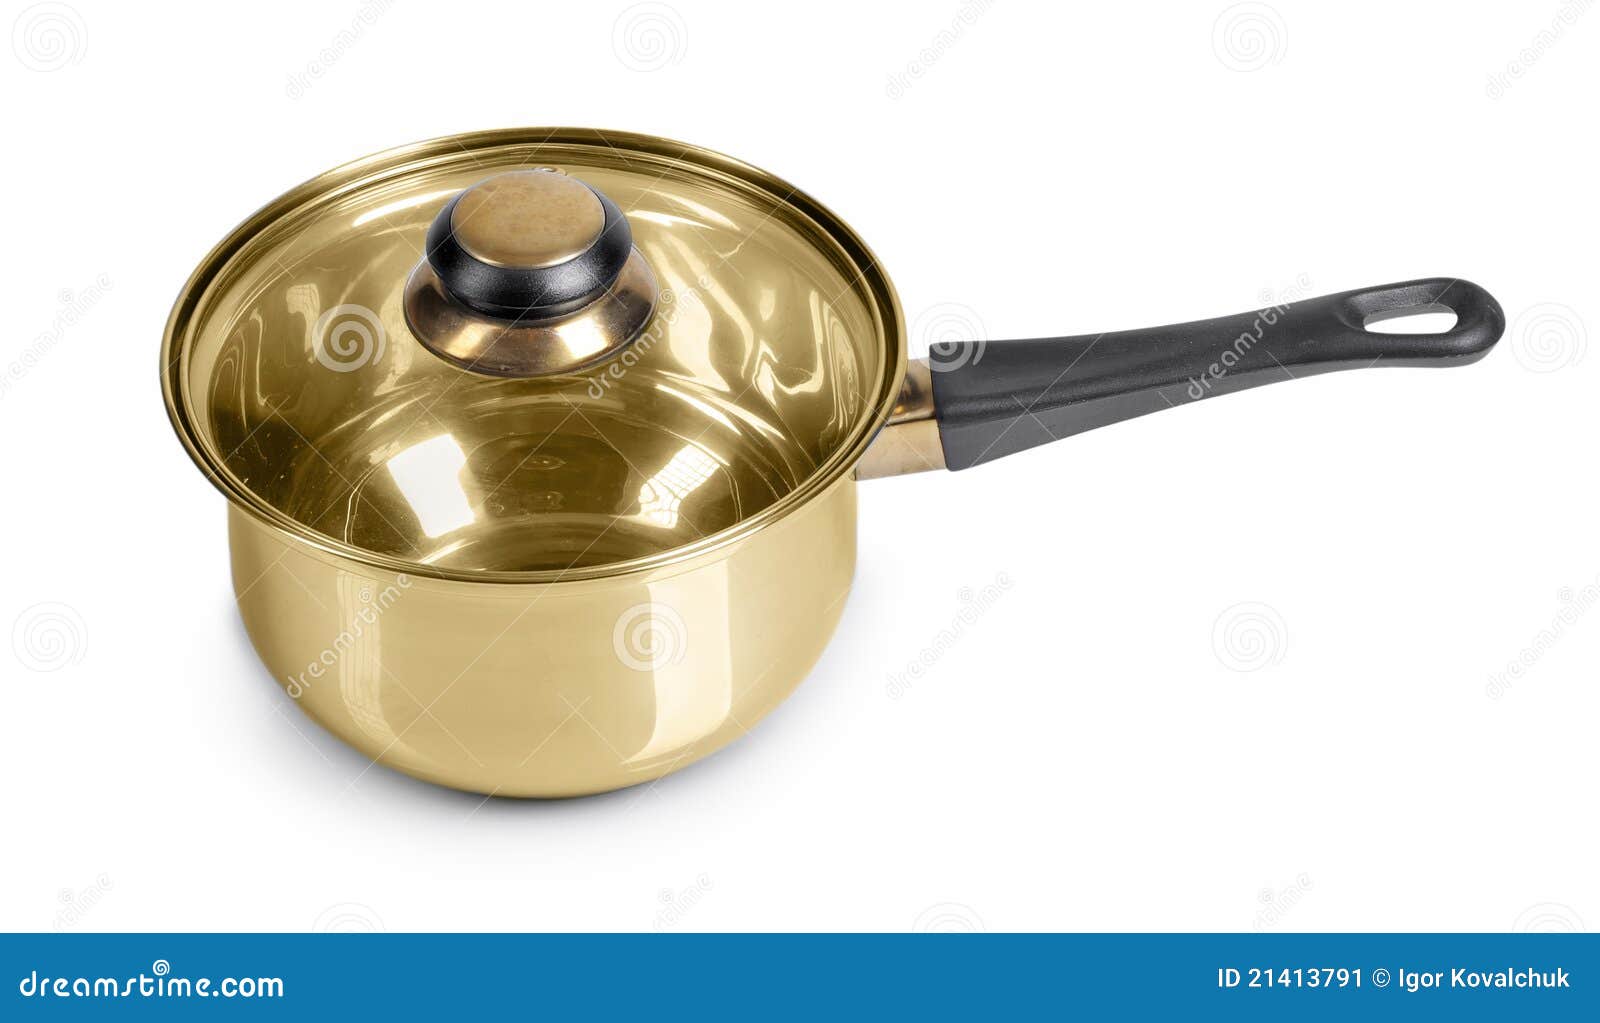 Steam golden frying pan фото 108